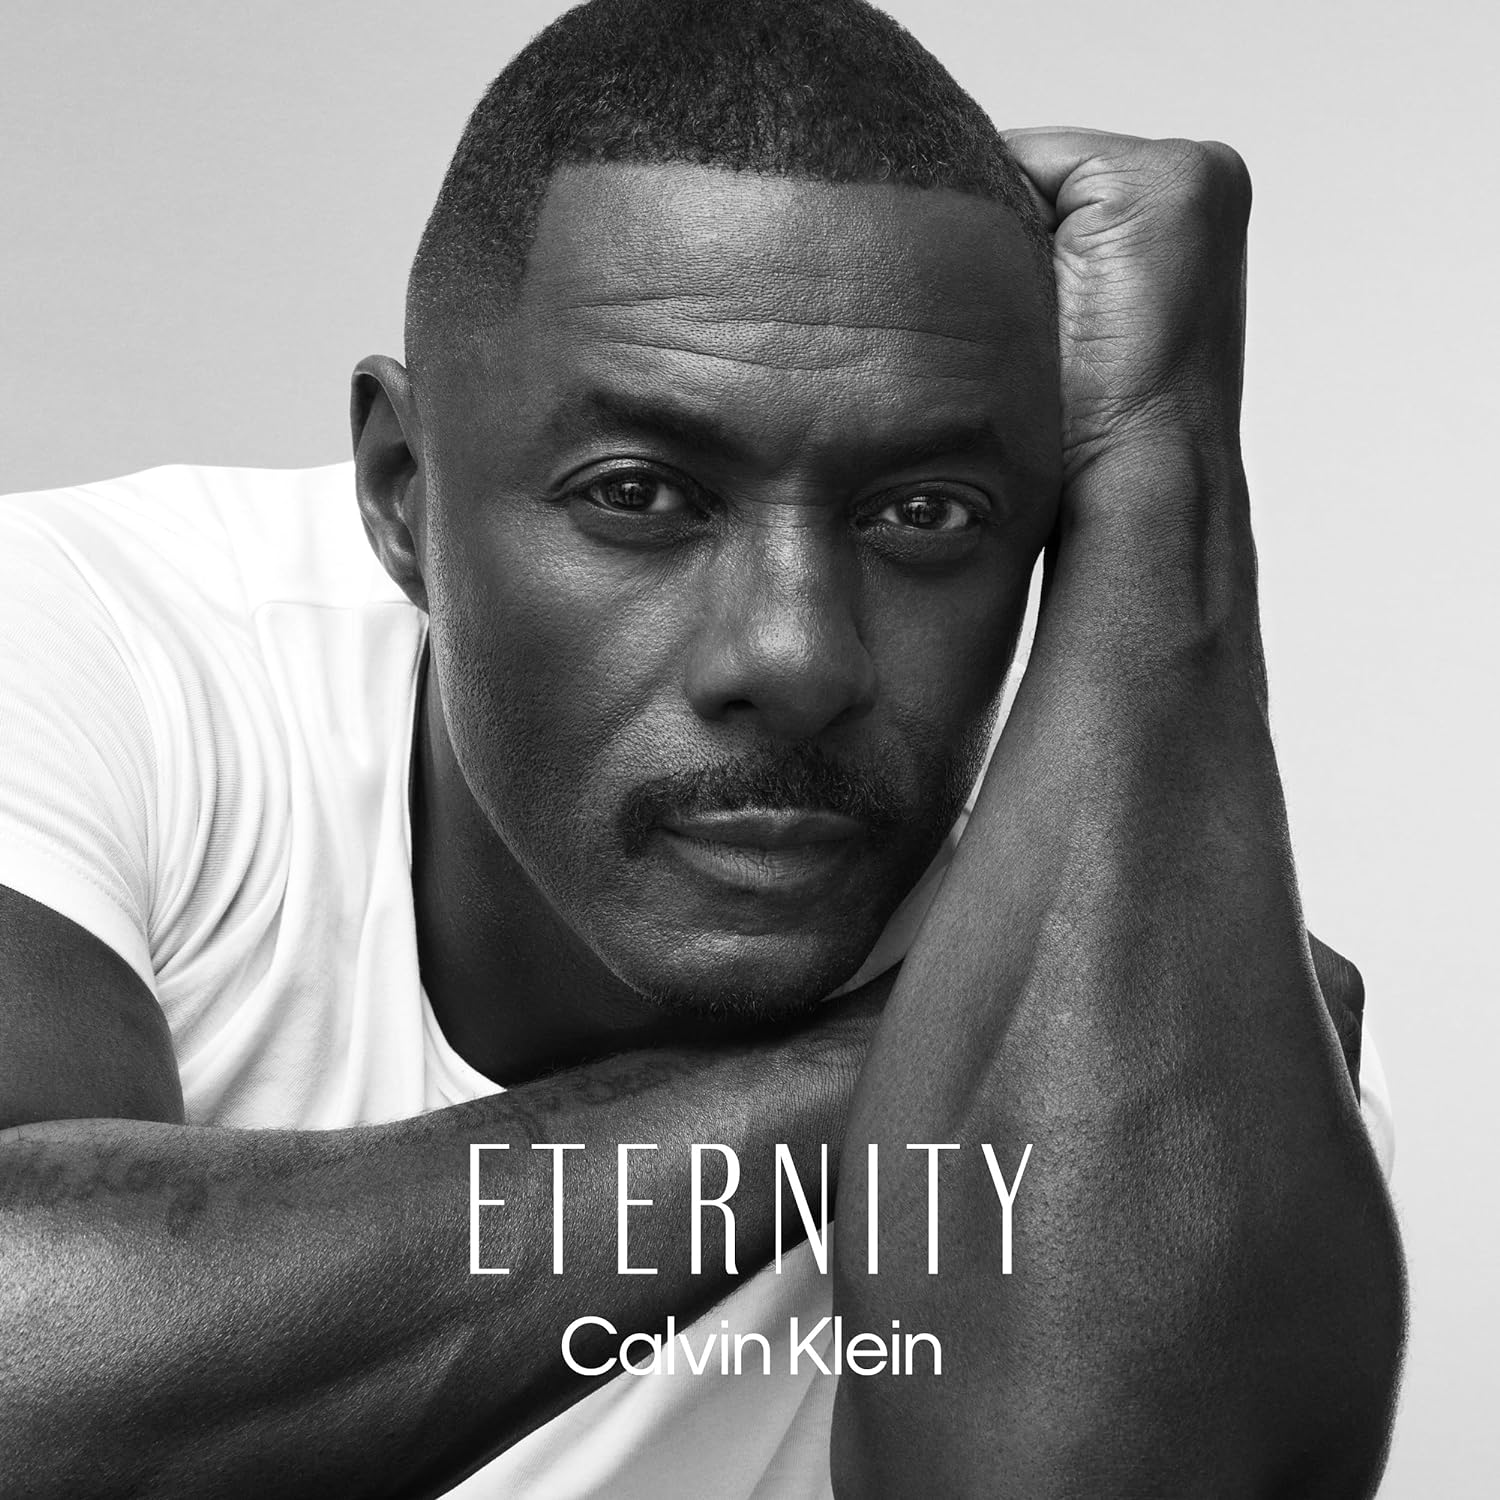 Calvin Klein Eternity for Men Eau De Toilette Cologne - Notes of Bergamot, Geranium, Sandalwood, and Amber